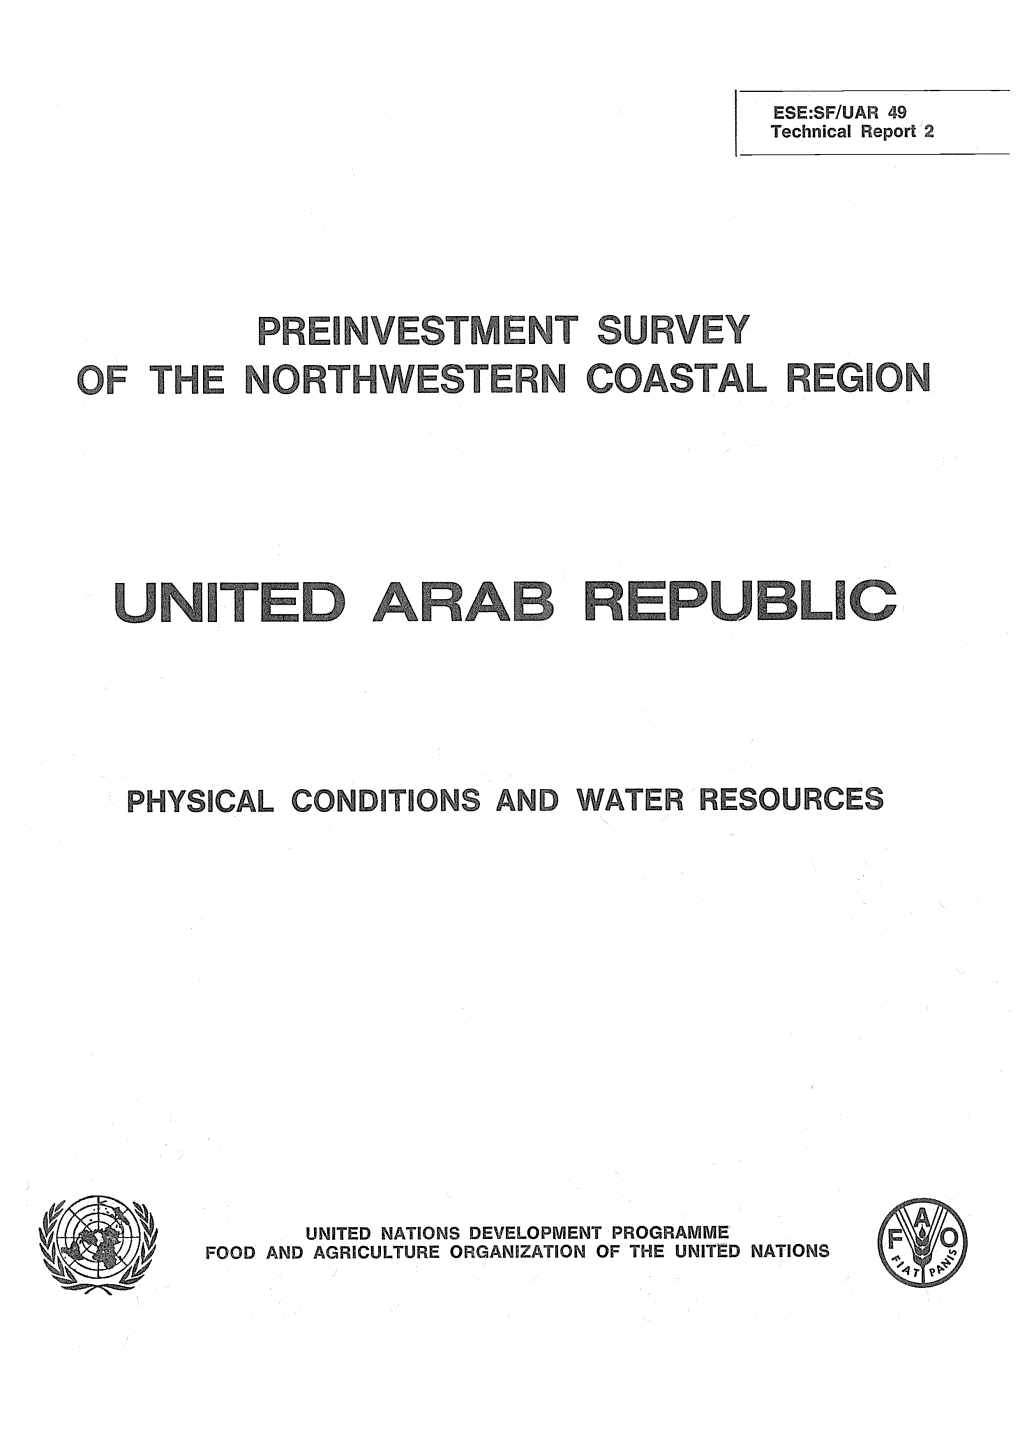 Preinvestment Survey of the Northwestern Coastal Region